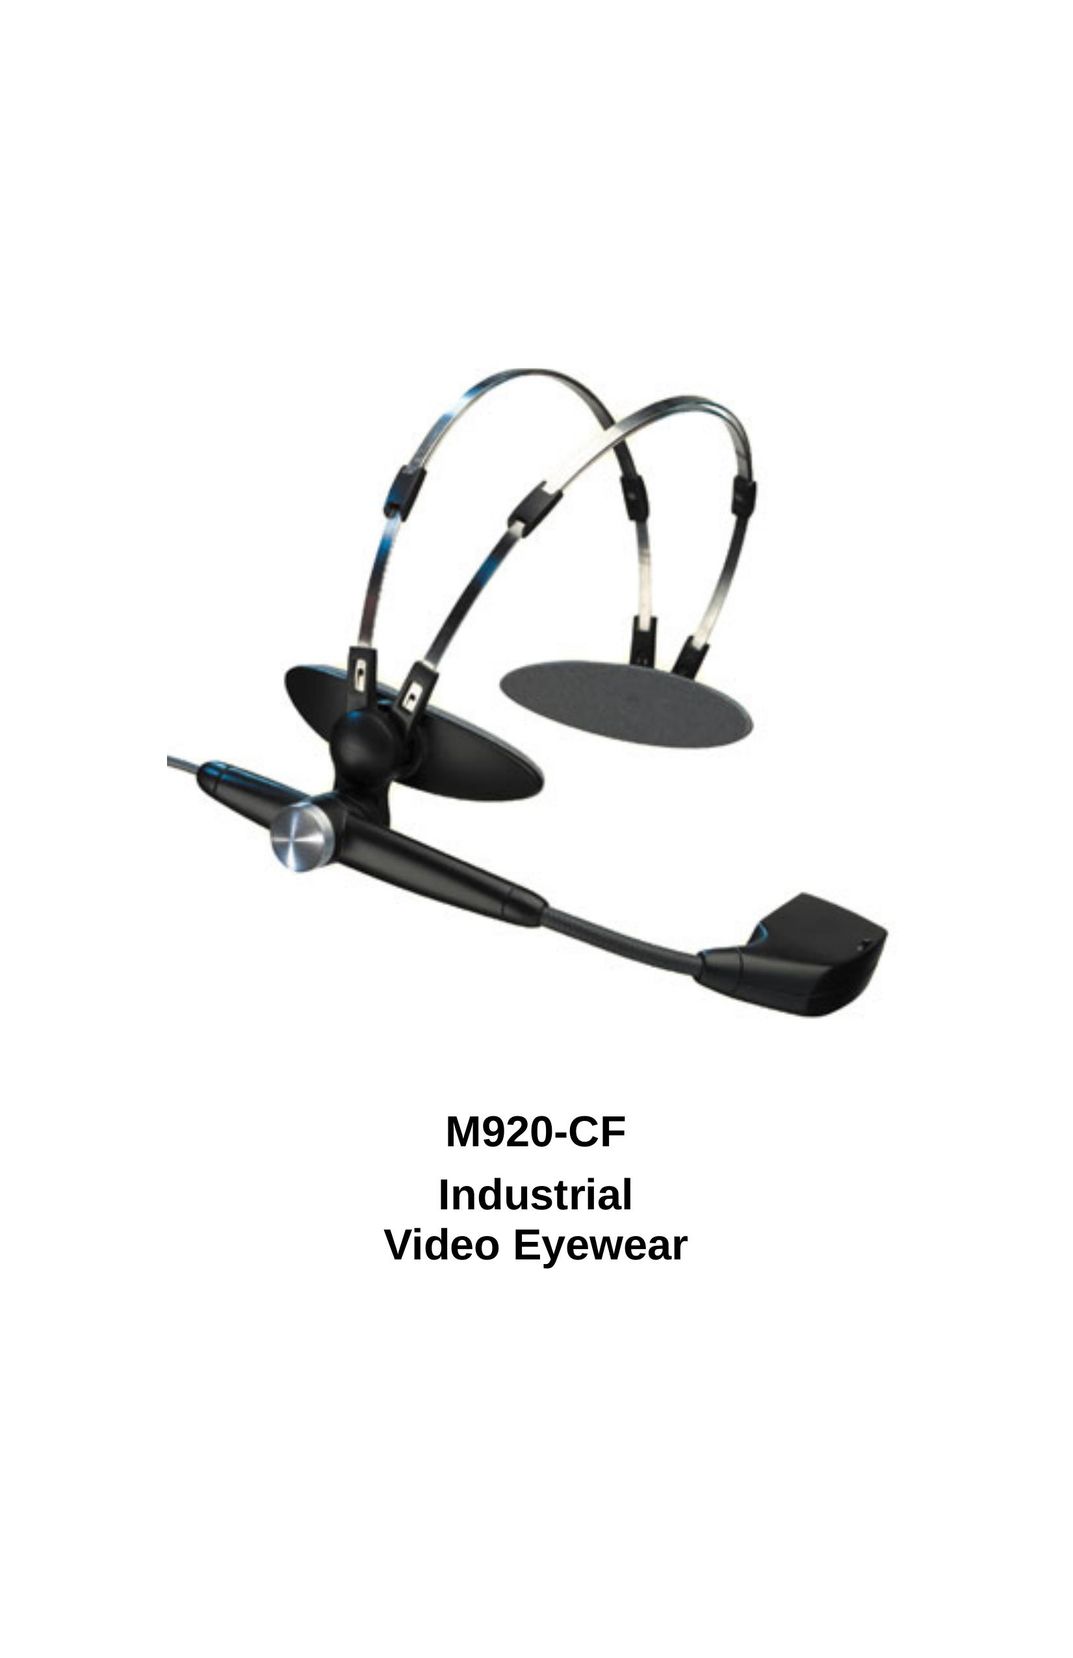 Icuiti M920-CF Video Eyeware User Manual